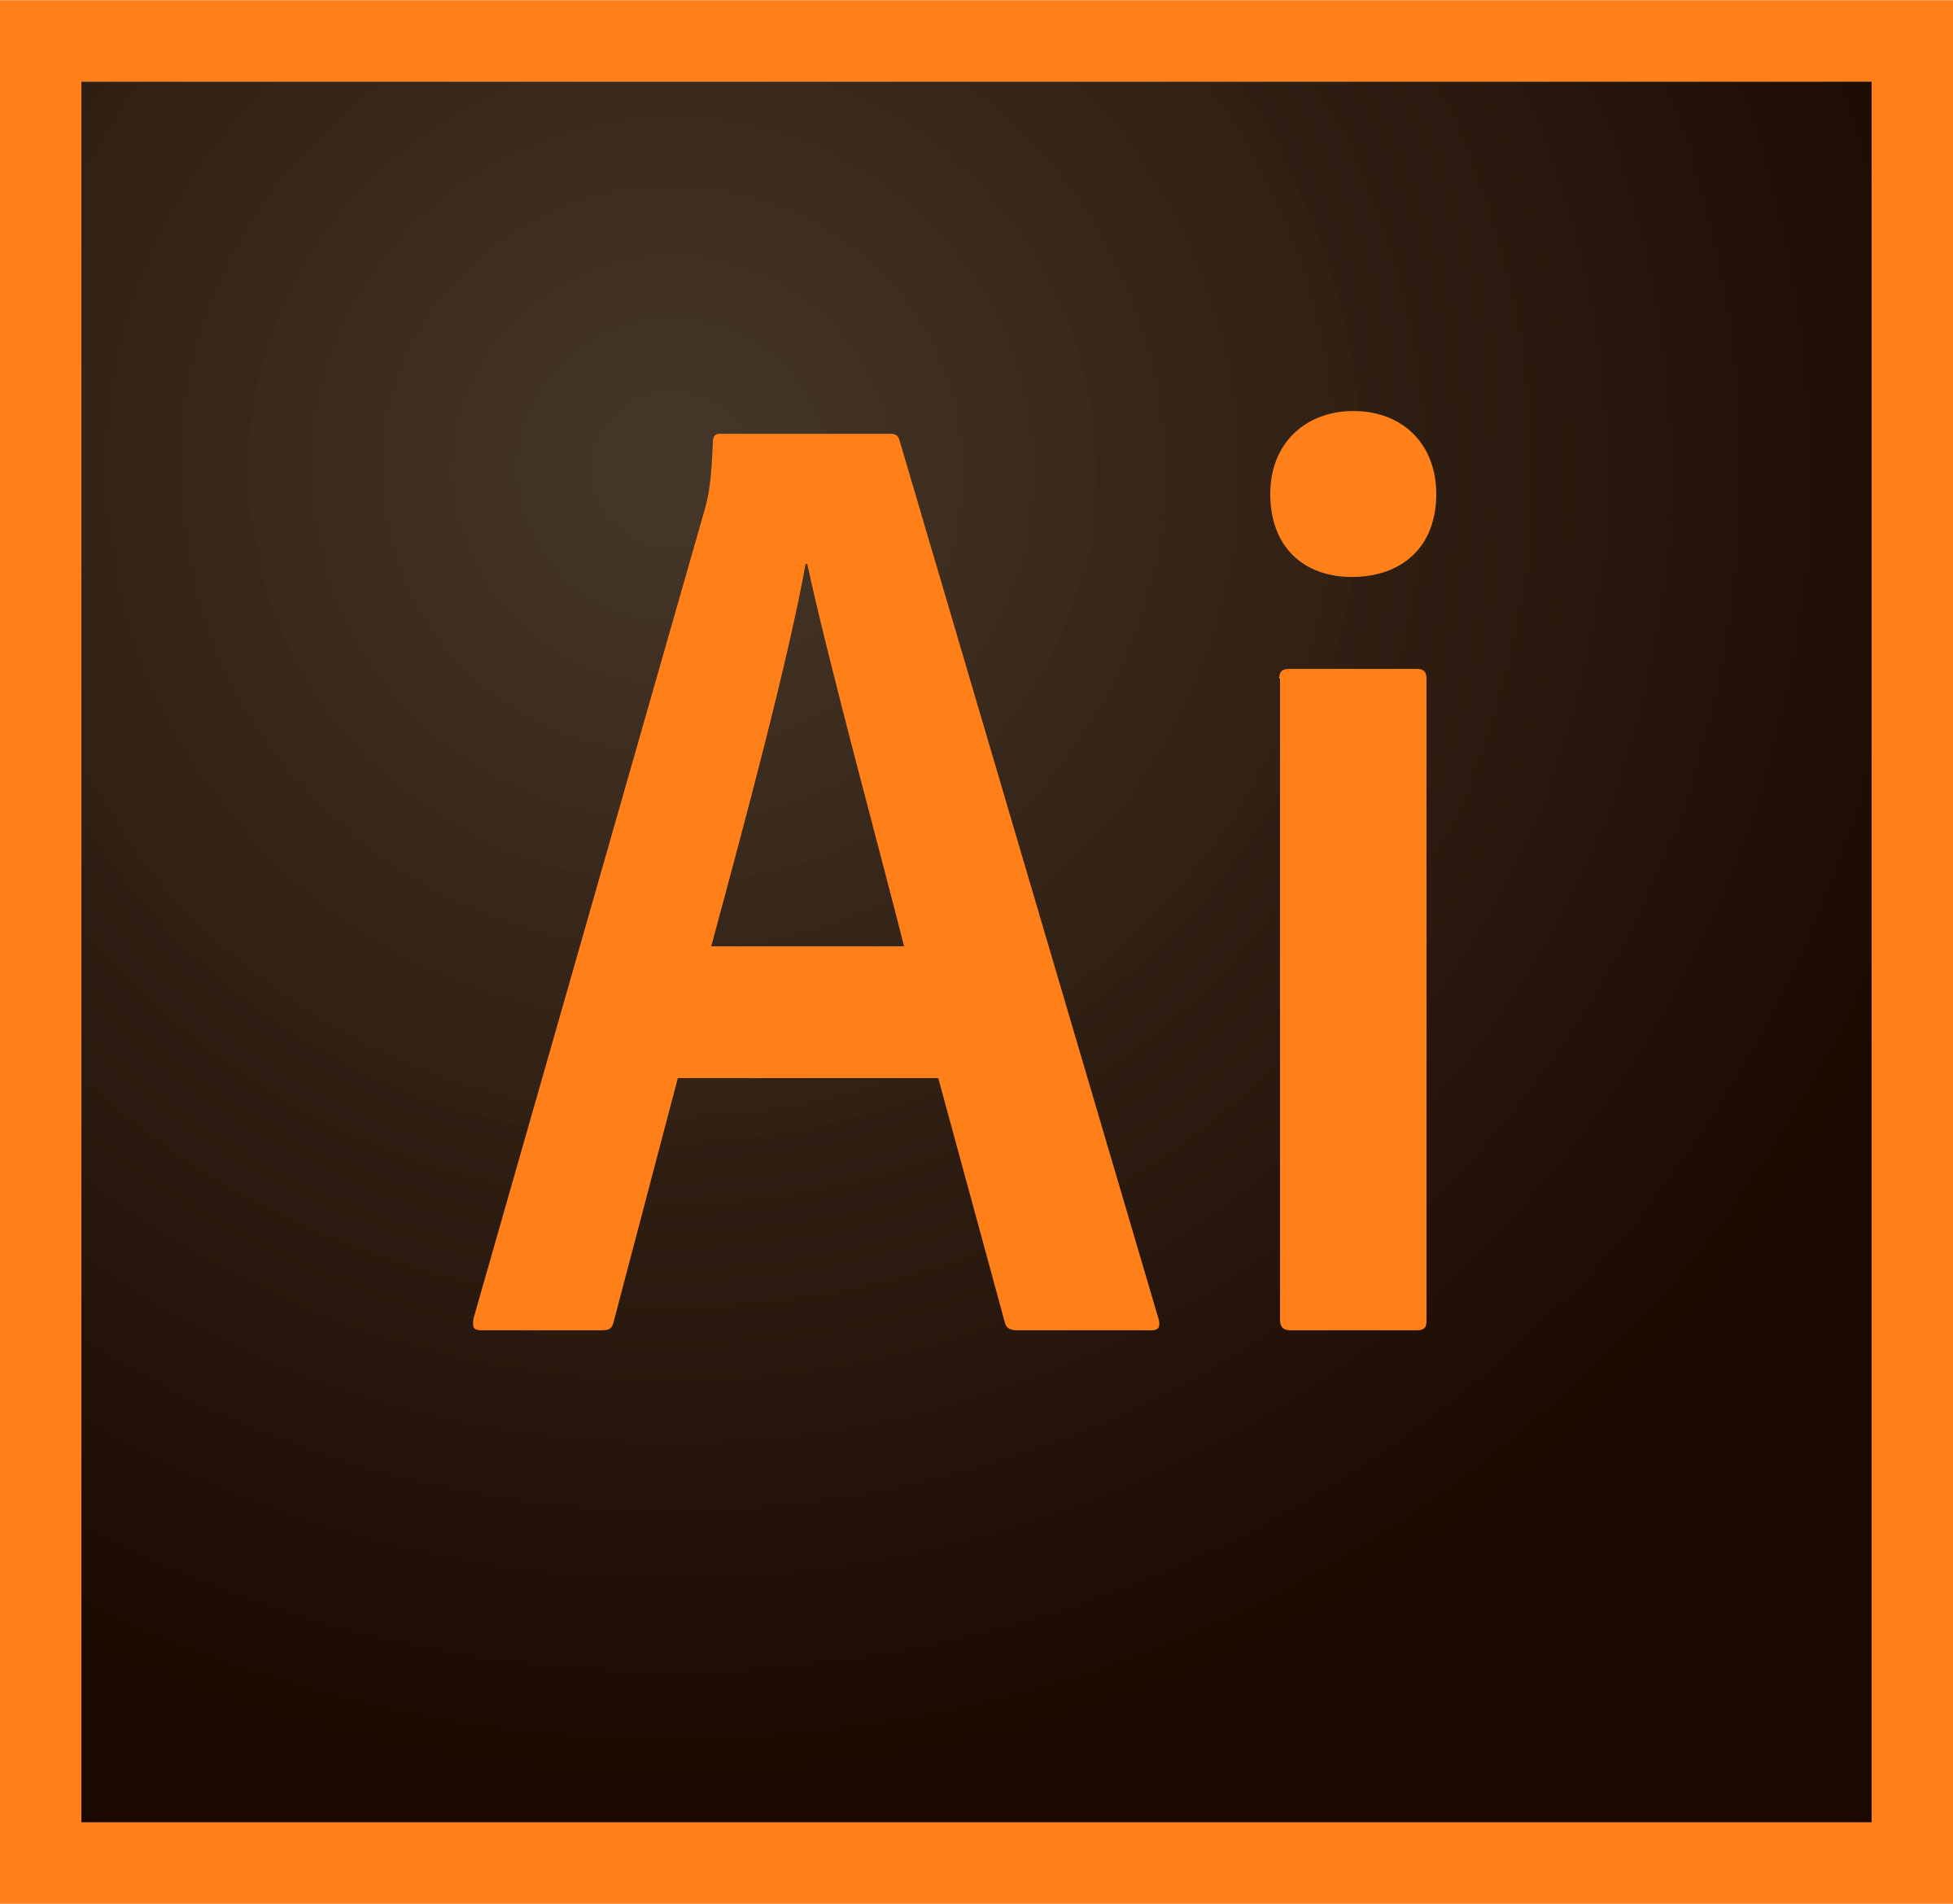 Adobe CC Logo - Adobe Illustrator CC Logo PNG Transparent & SVG Vector